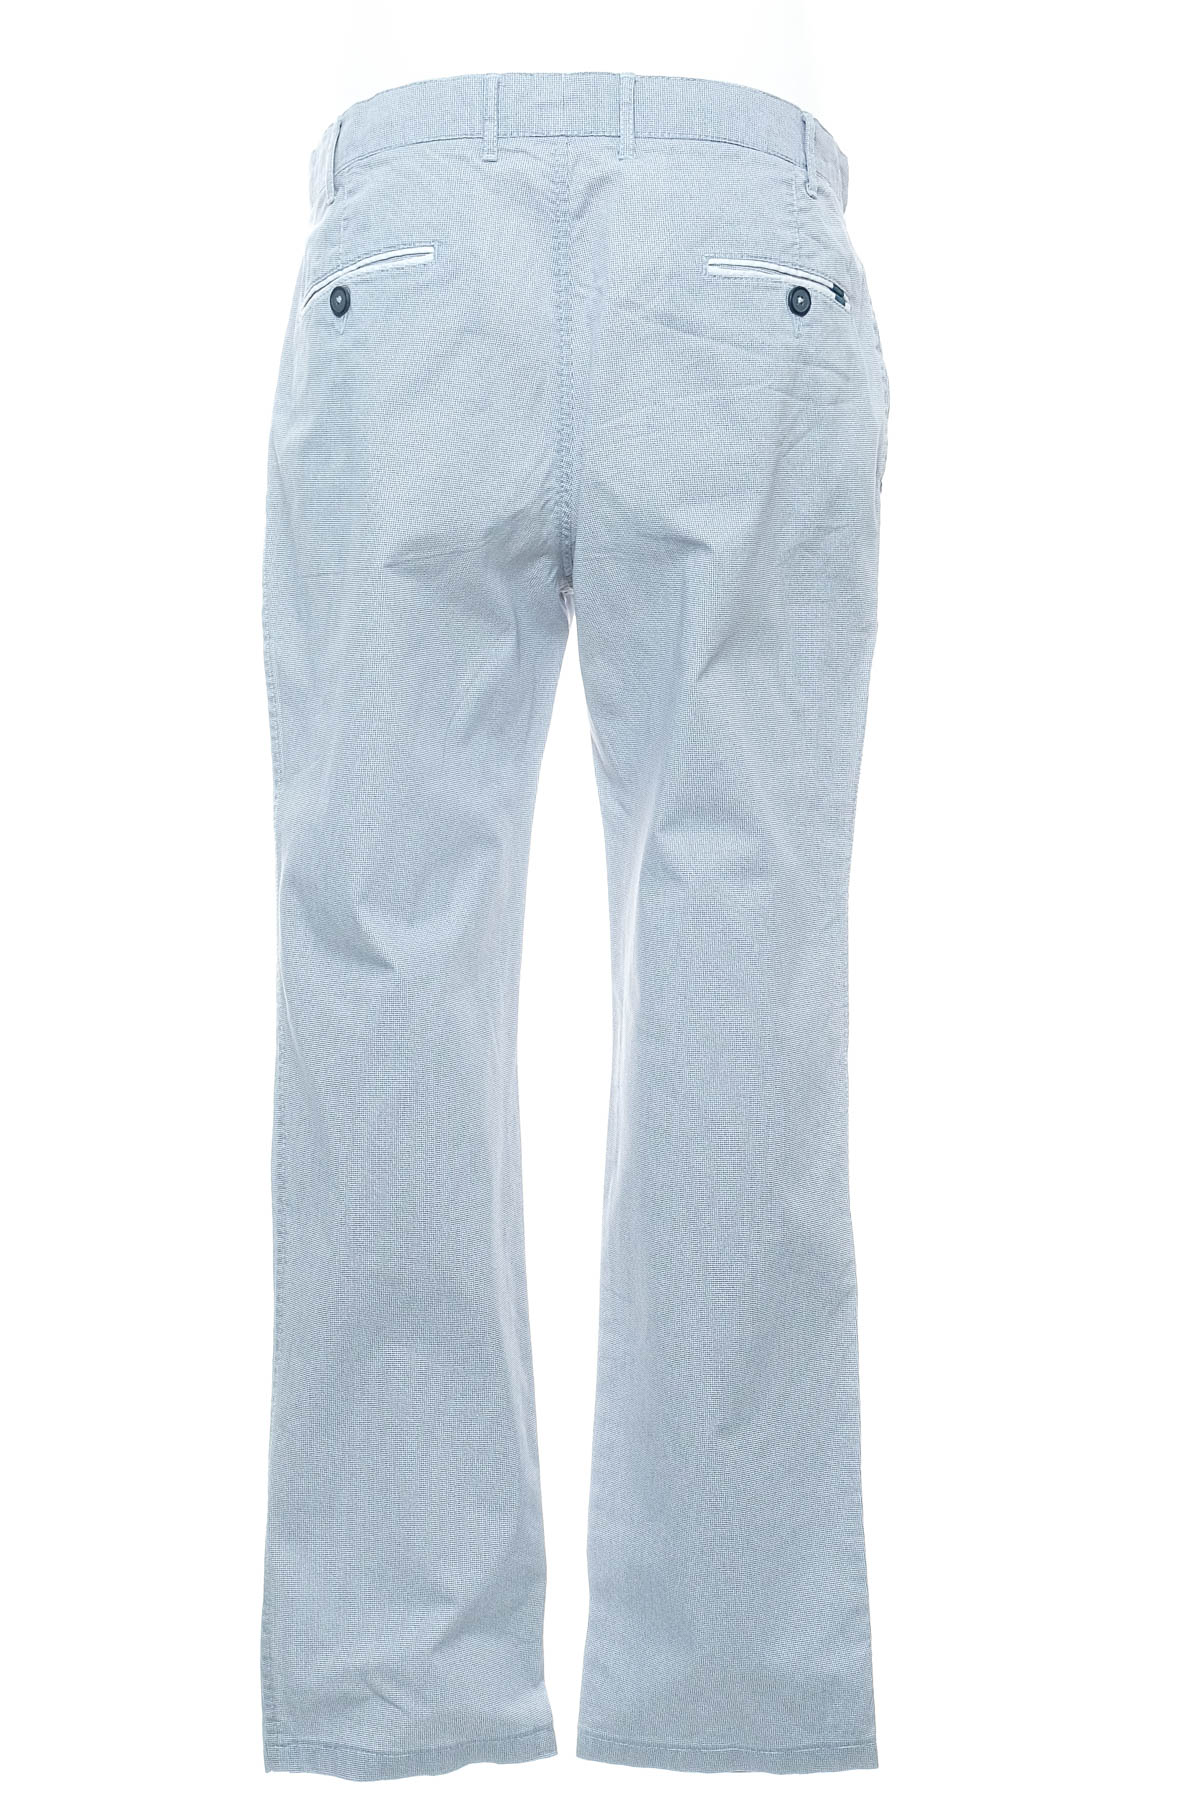 Men's trousers - FUGARO - 1